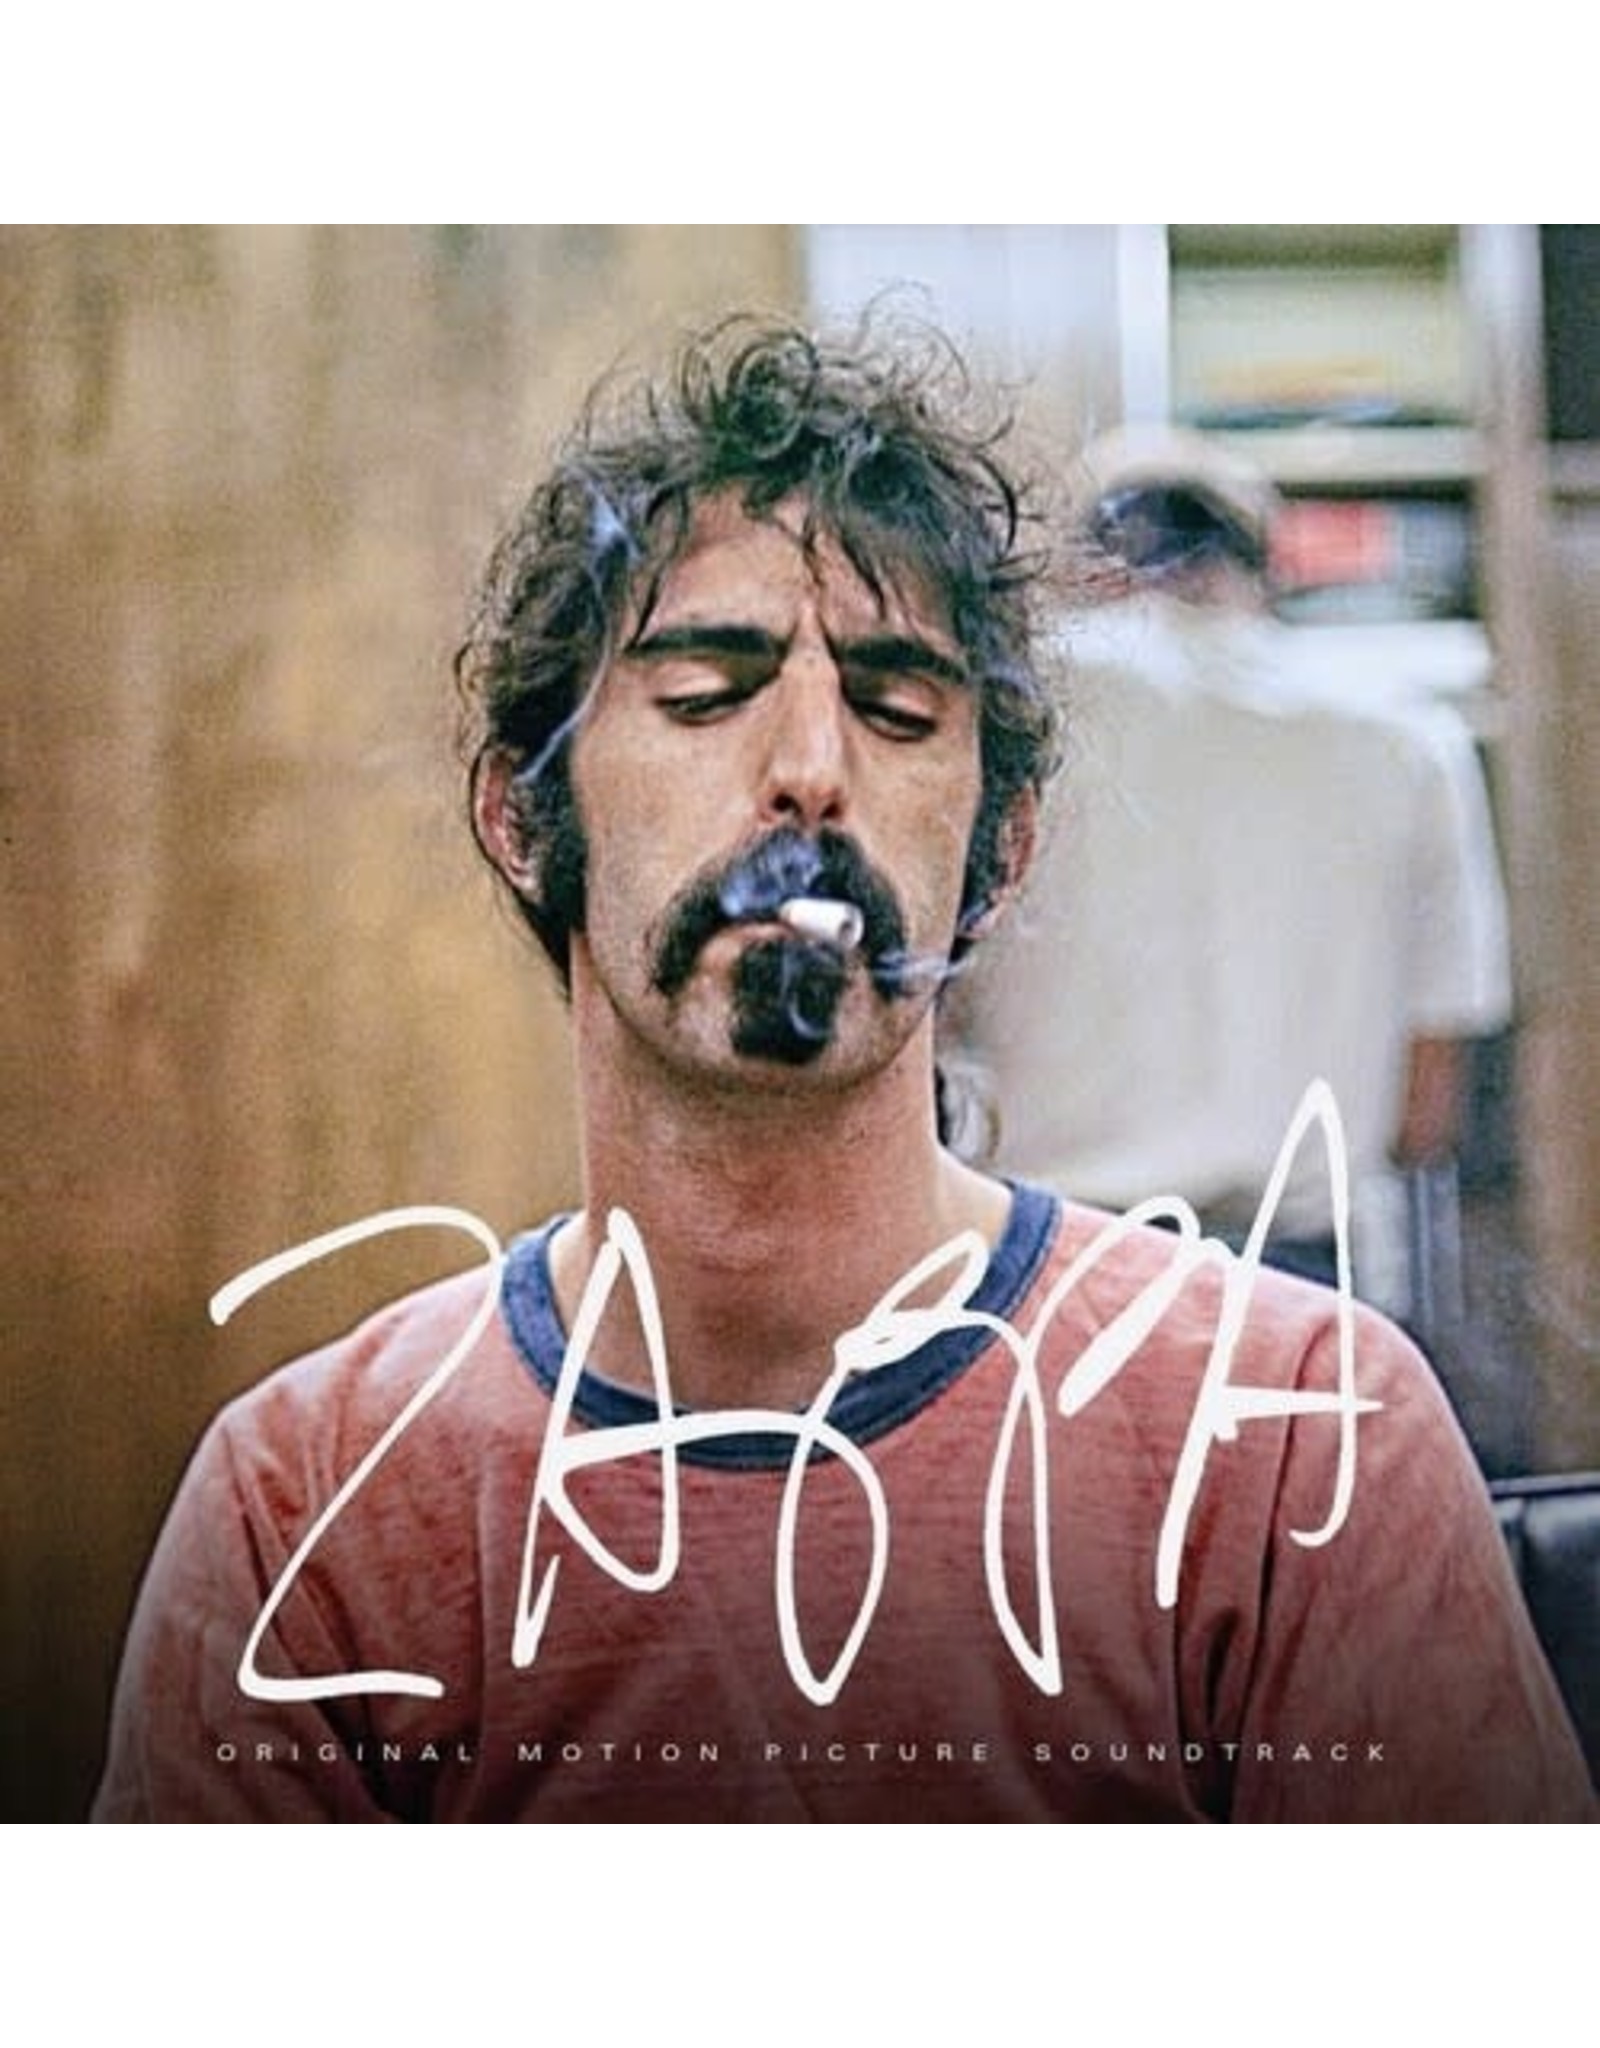 New Vinyl Frank Zappa - Zappa OST (Clear) 2LP